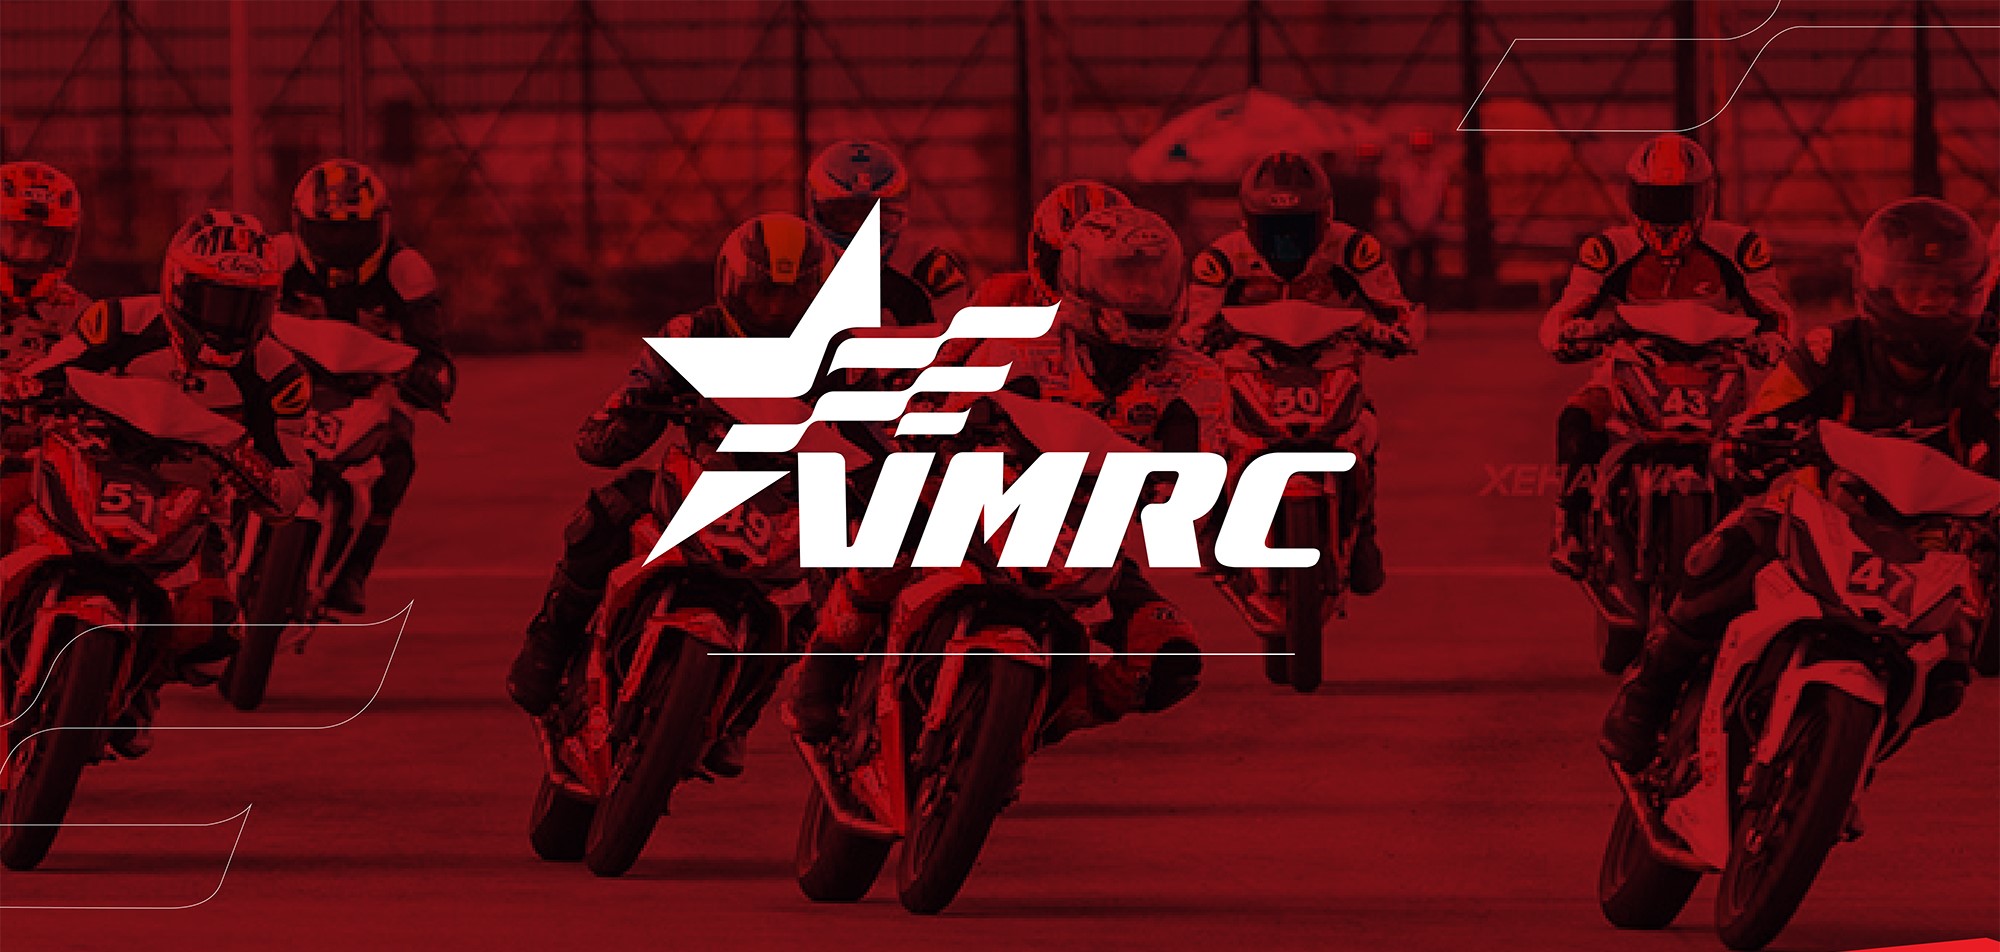 VMRC - Vietnam Motor Racing Championship